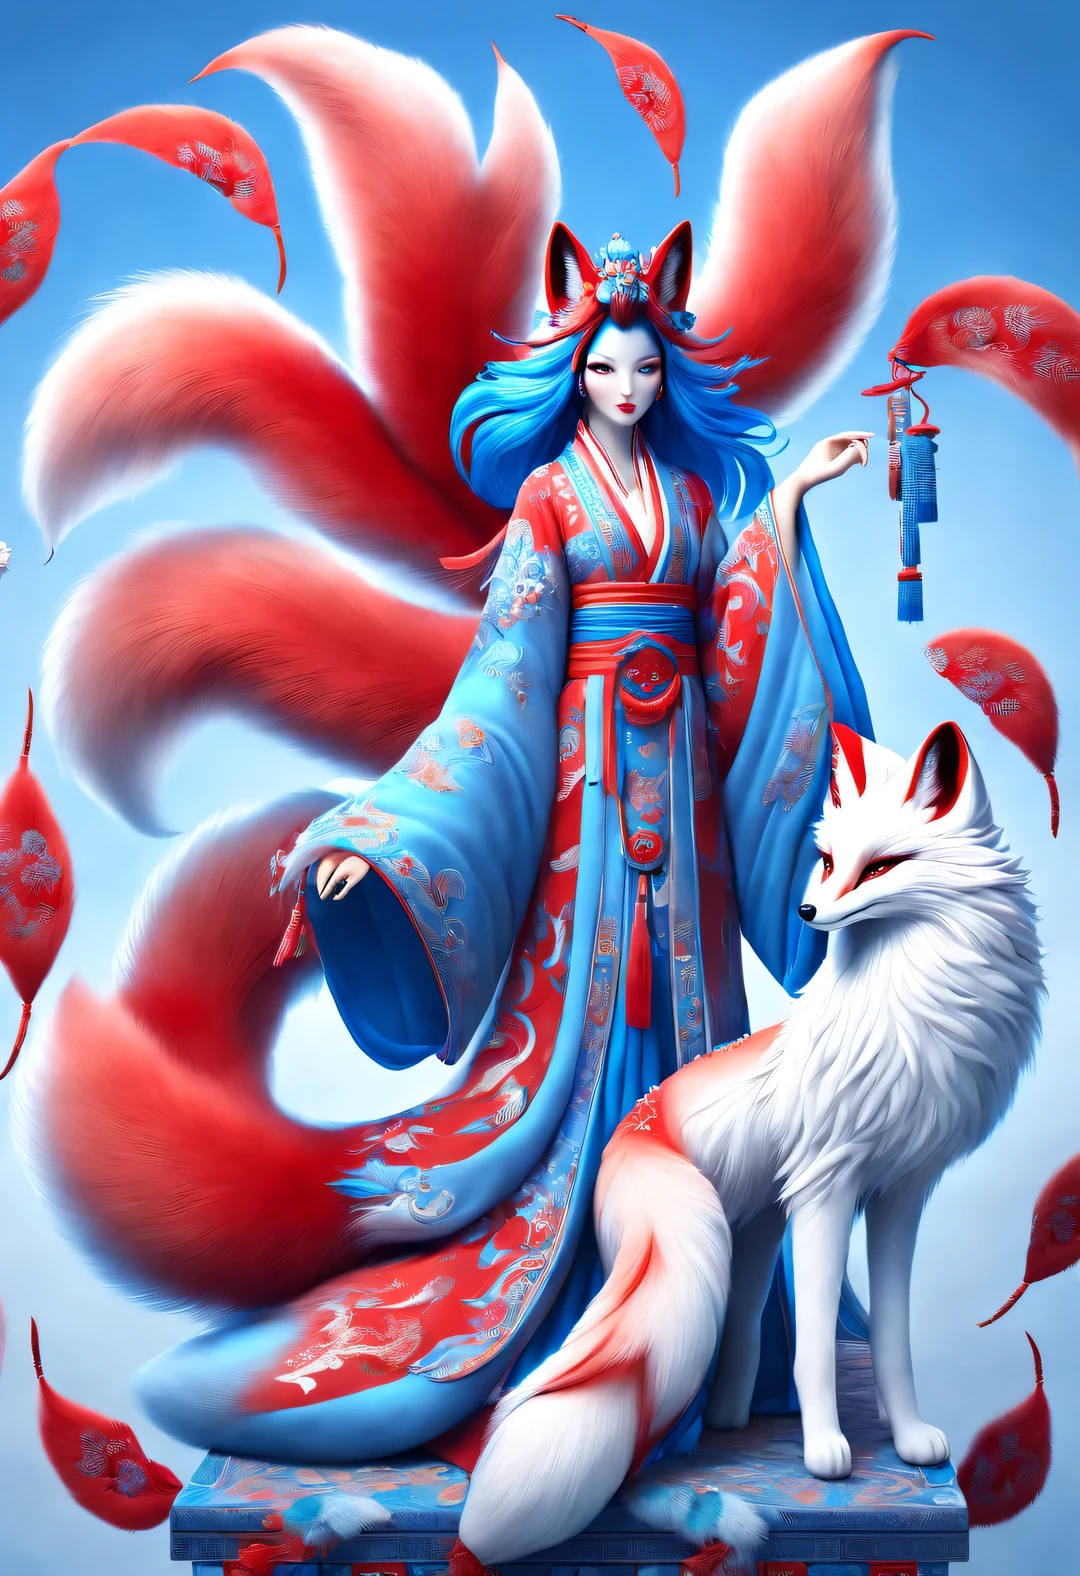 Zbrush スタイルの赤と青のファッション ペインティング, 東洋風, ソフトなリアリズムとシュールなディテール, 青と空色のトーン, (白髪、青い目、9つの赤い尾を持つキツネ), ふわふわの赤い尻尾がたくさん巻き付いている, 古代中国の神話上の獣, ファンタジー,